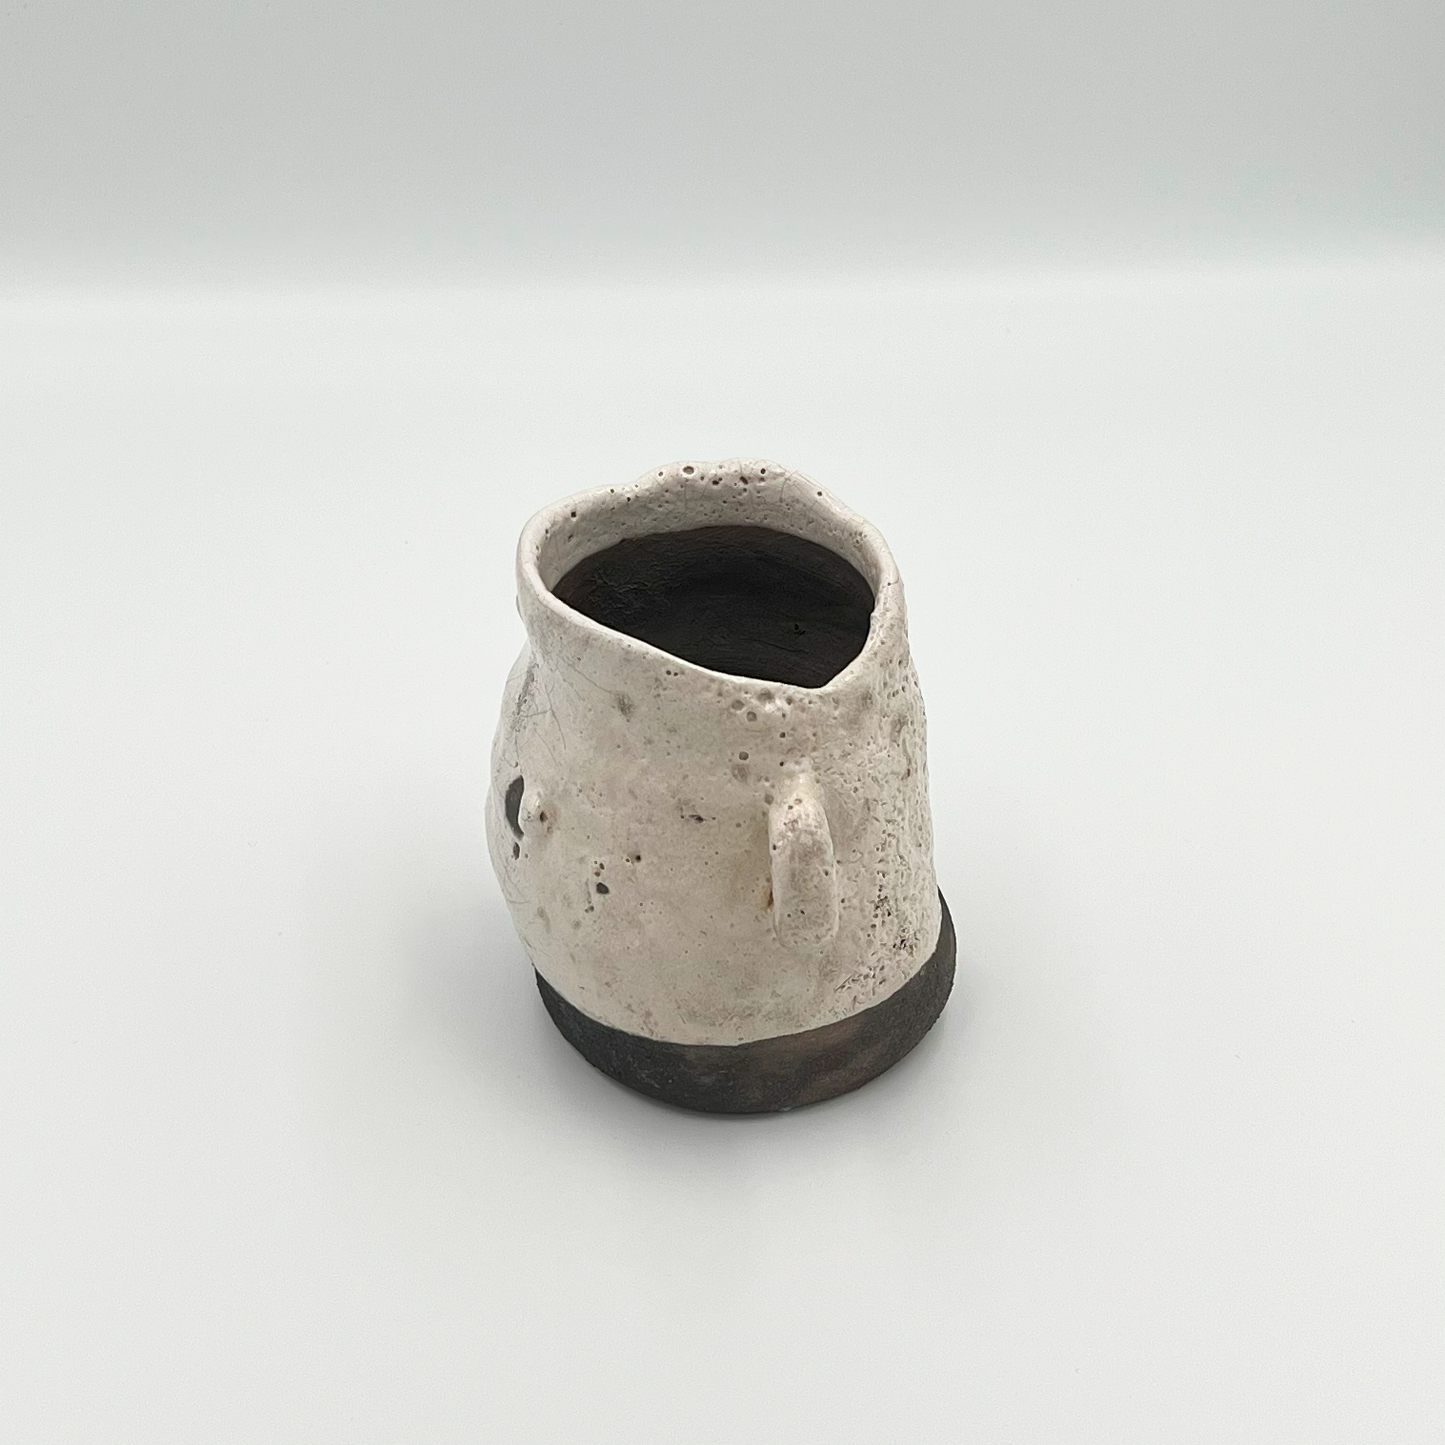 Ear-handled small vase